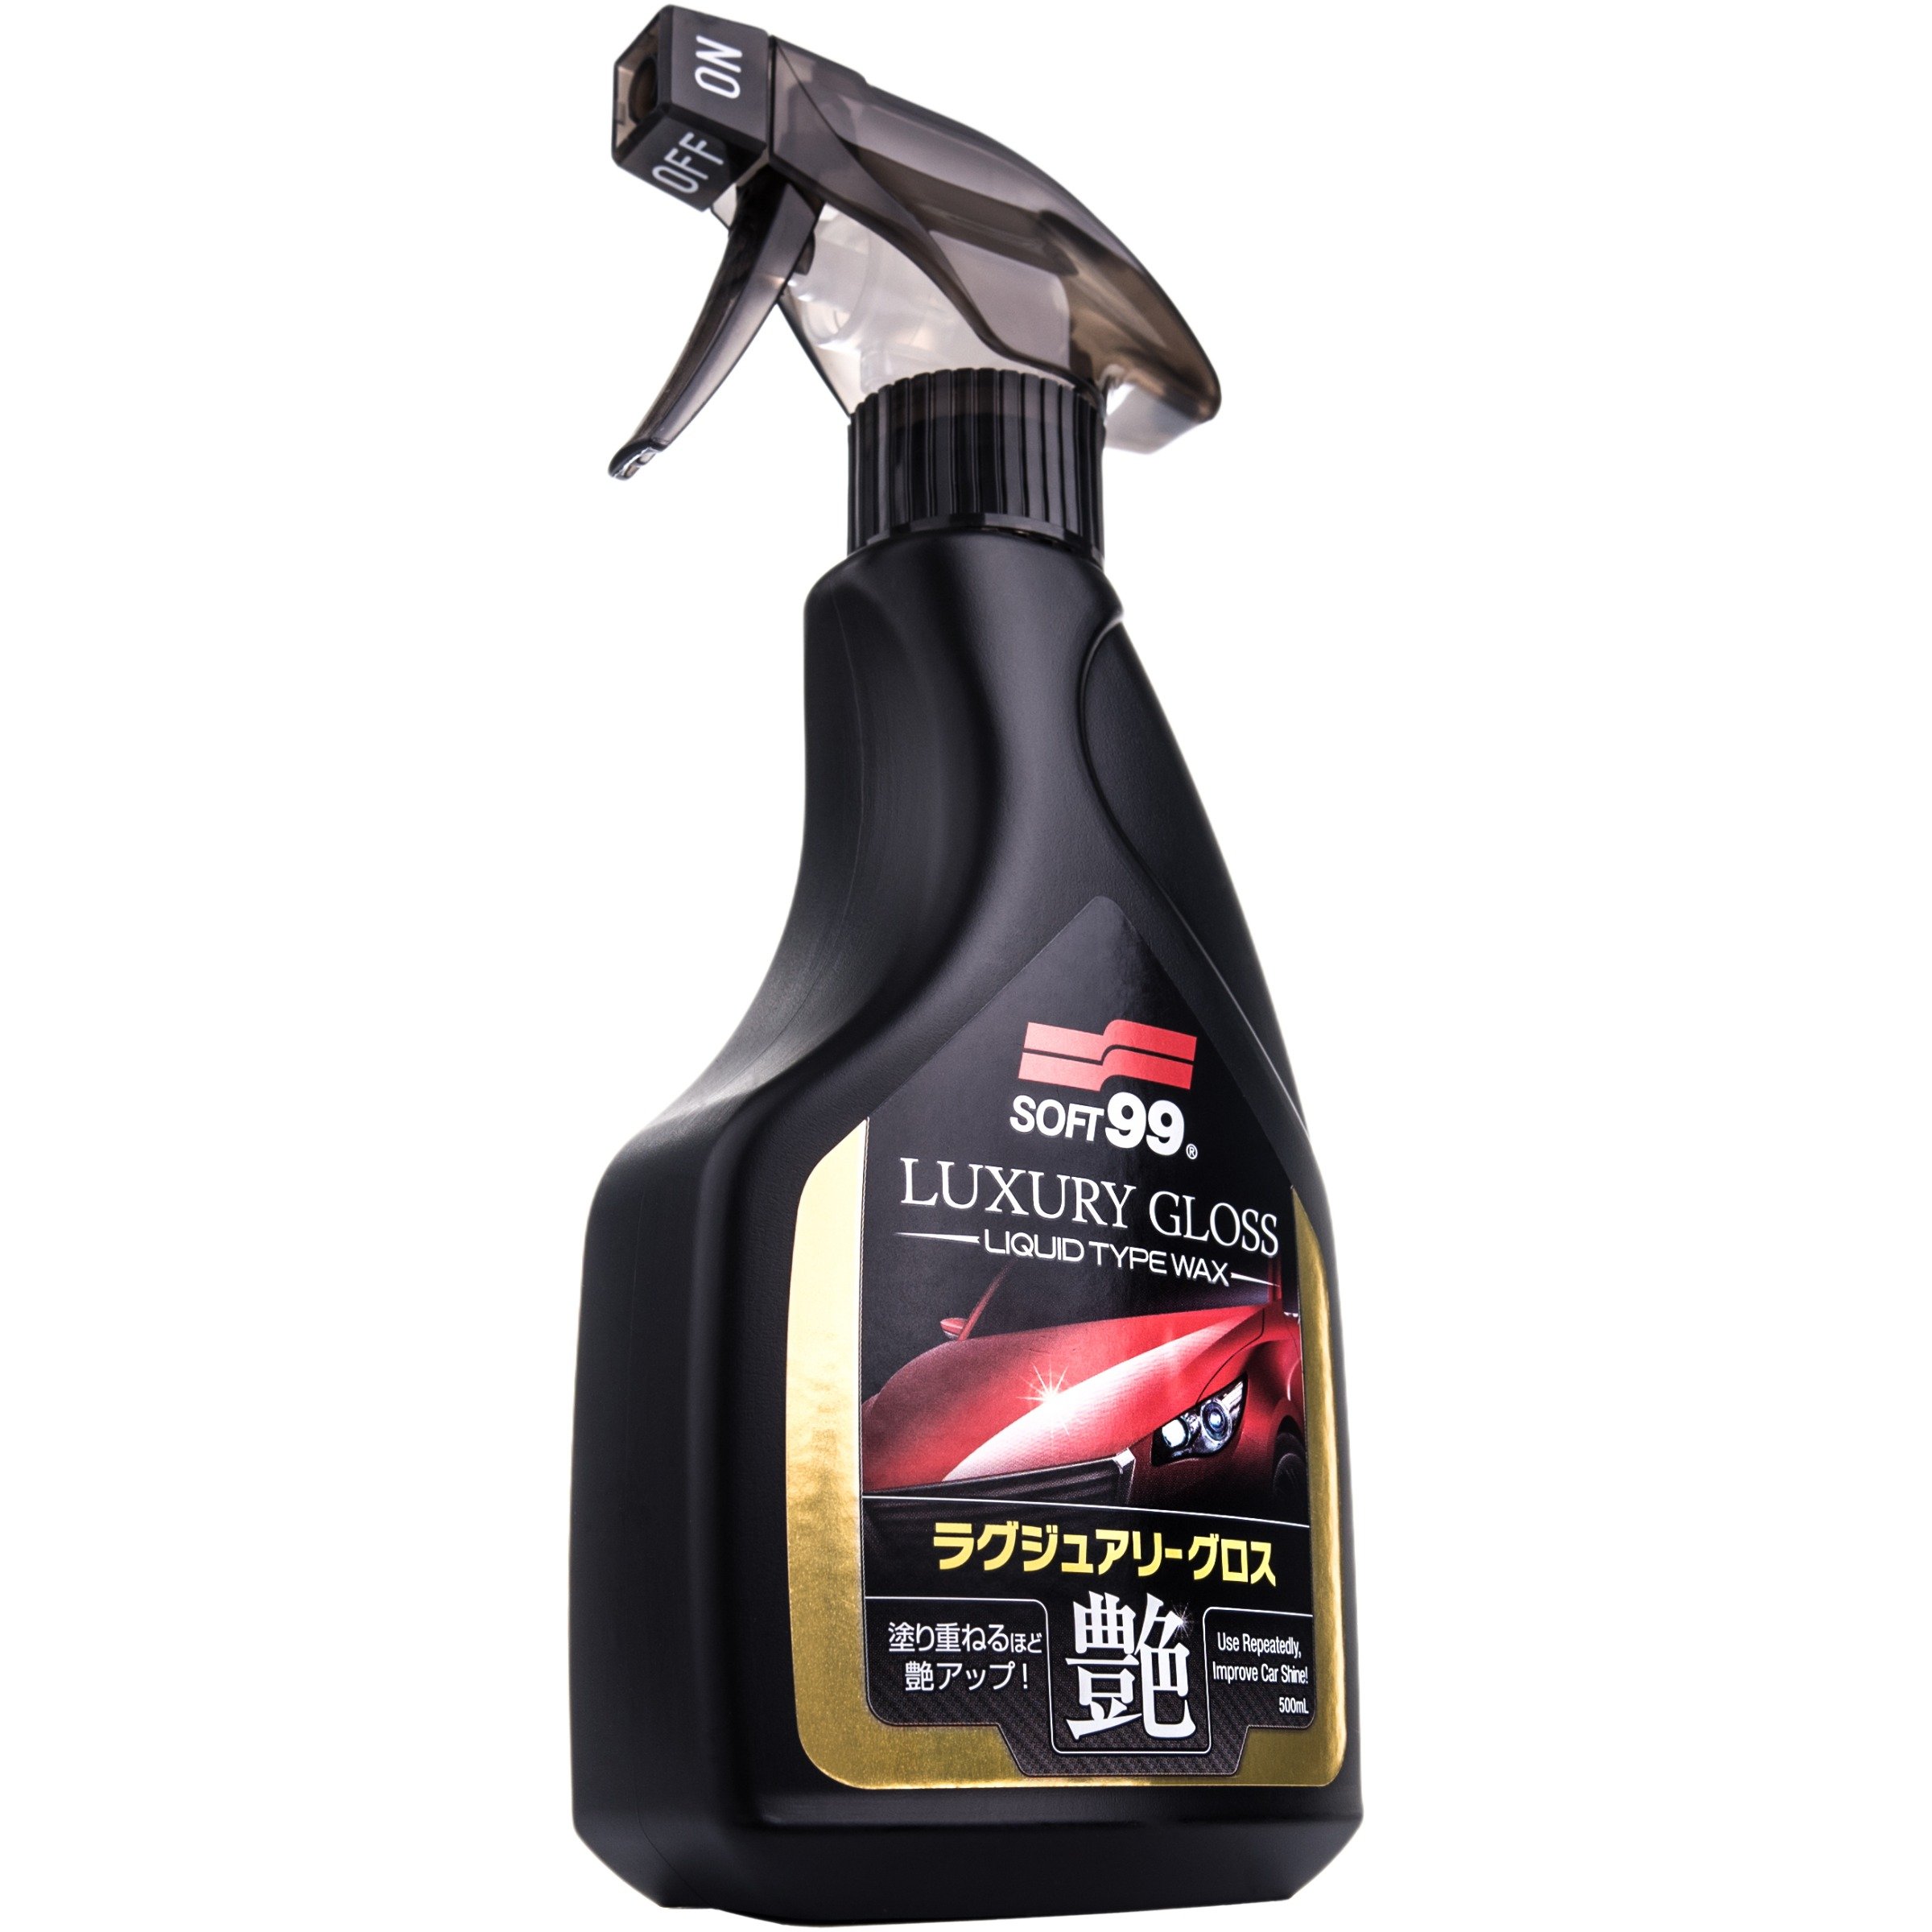 Luxury Gloss Spray Wax - 500ml